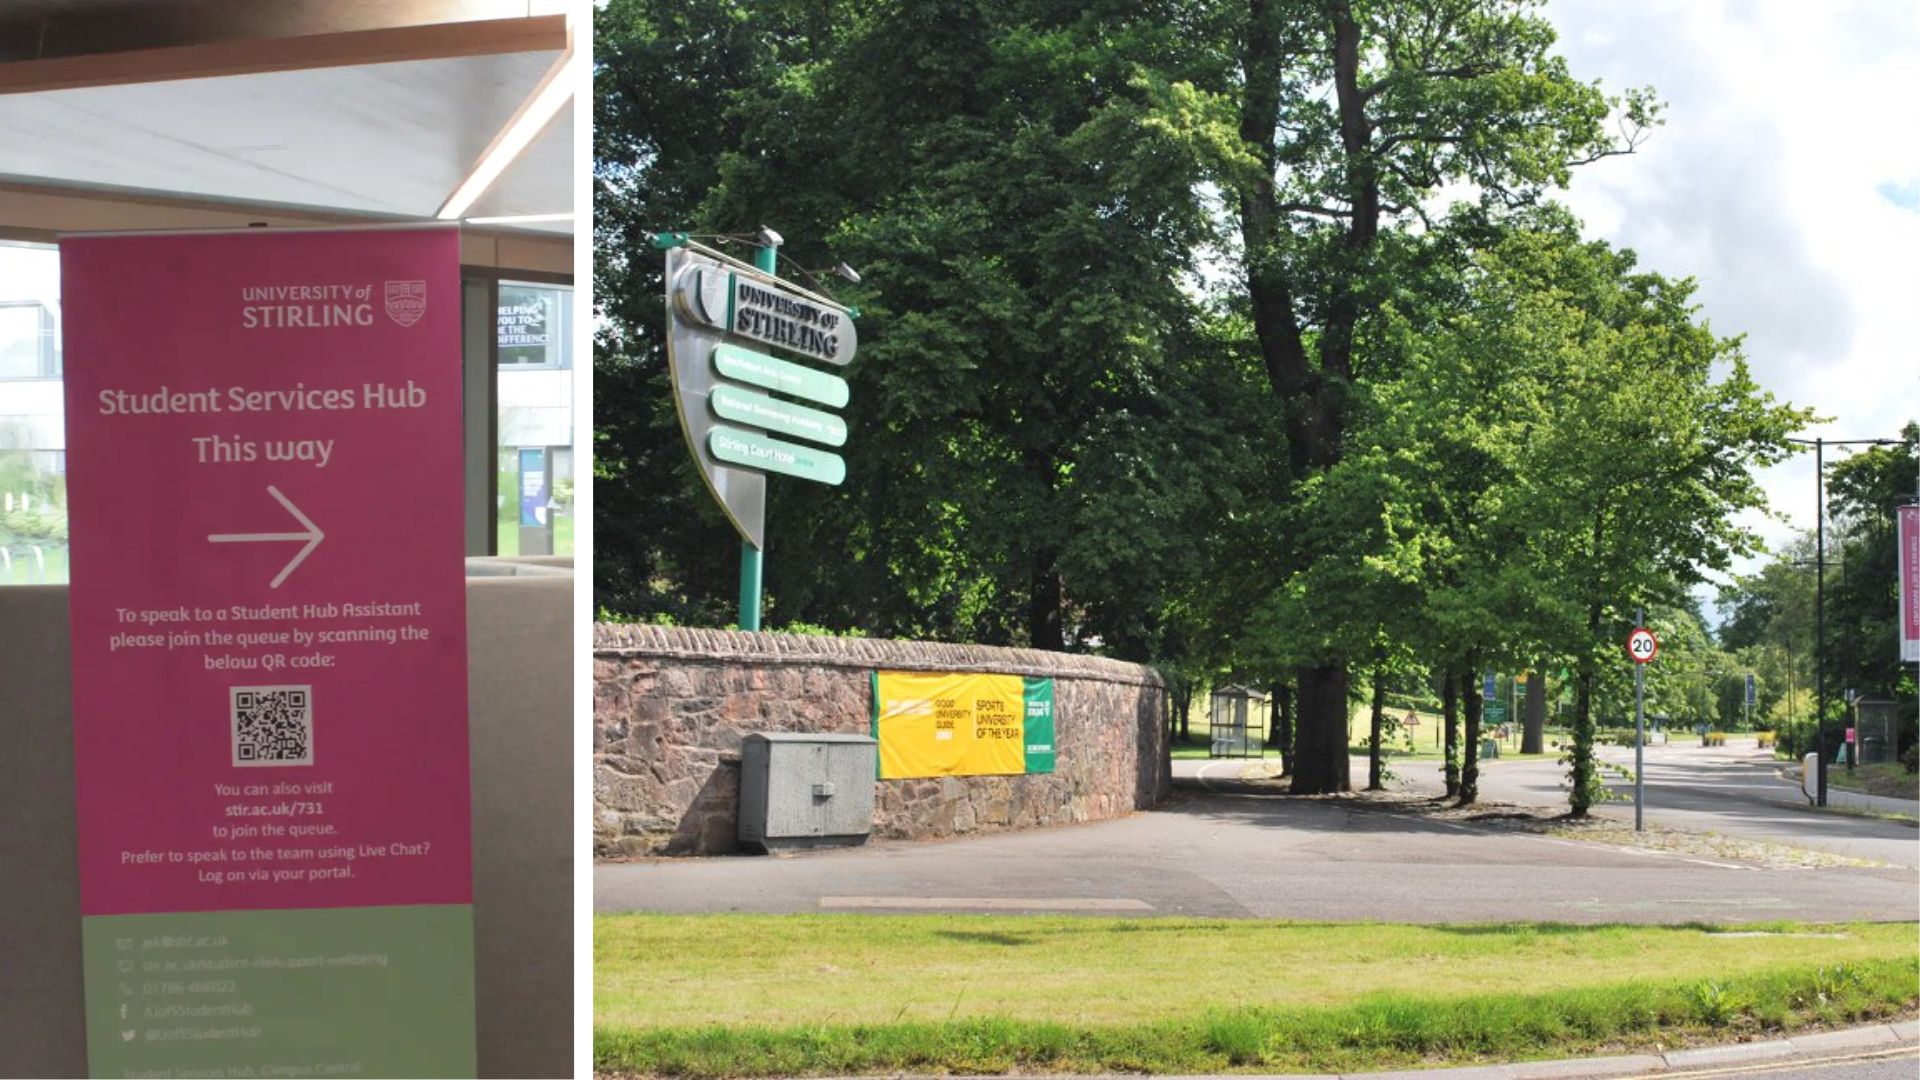 University of Stirling entrance